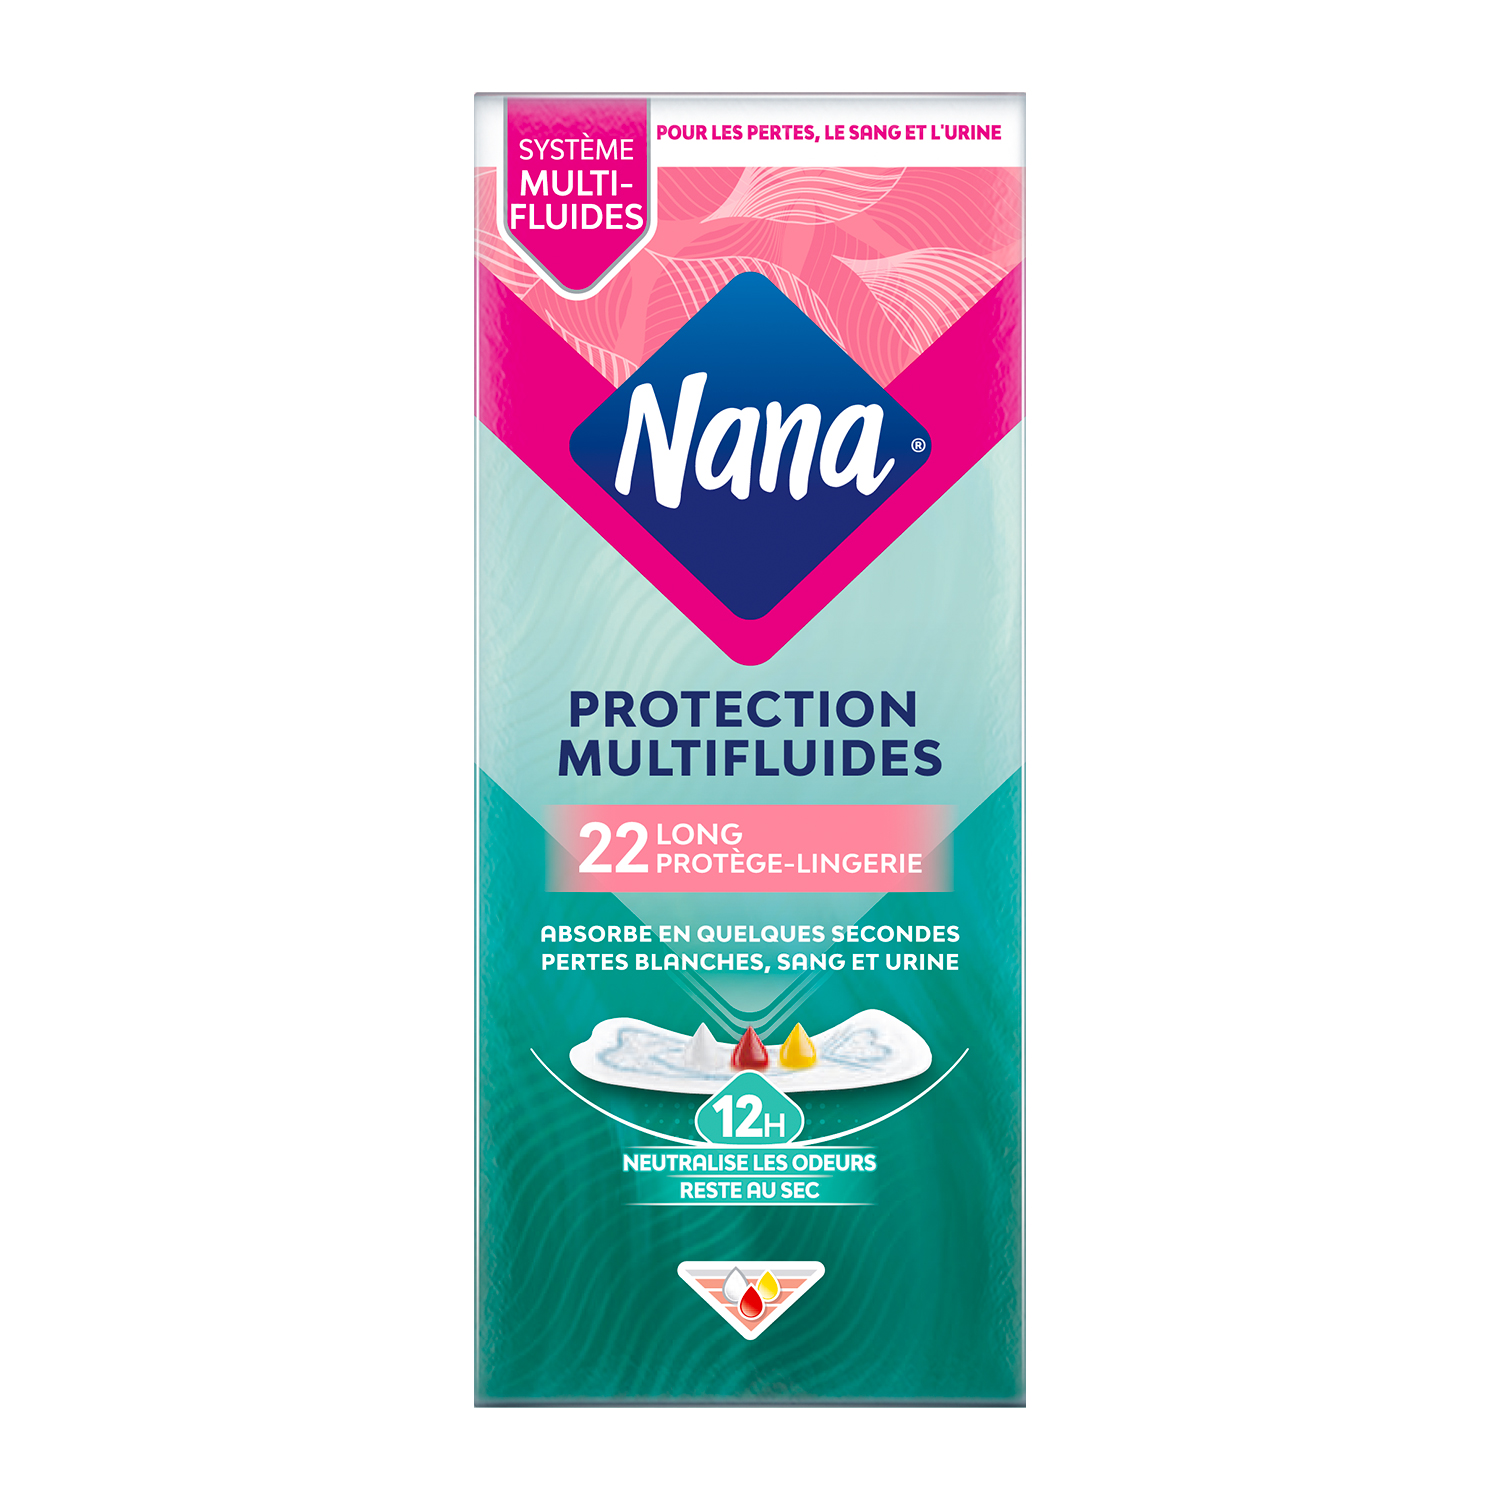 Nana – Protection Multifluides